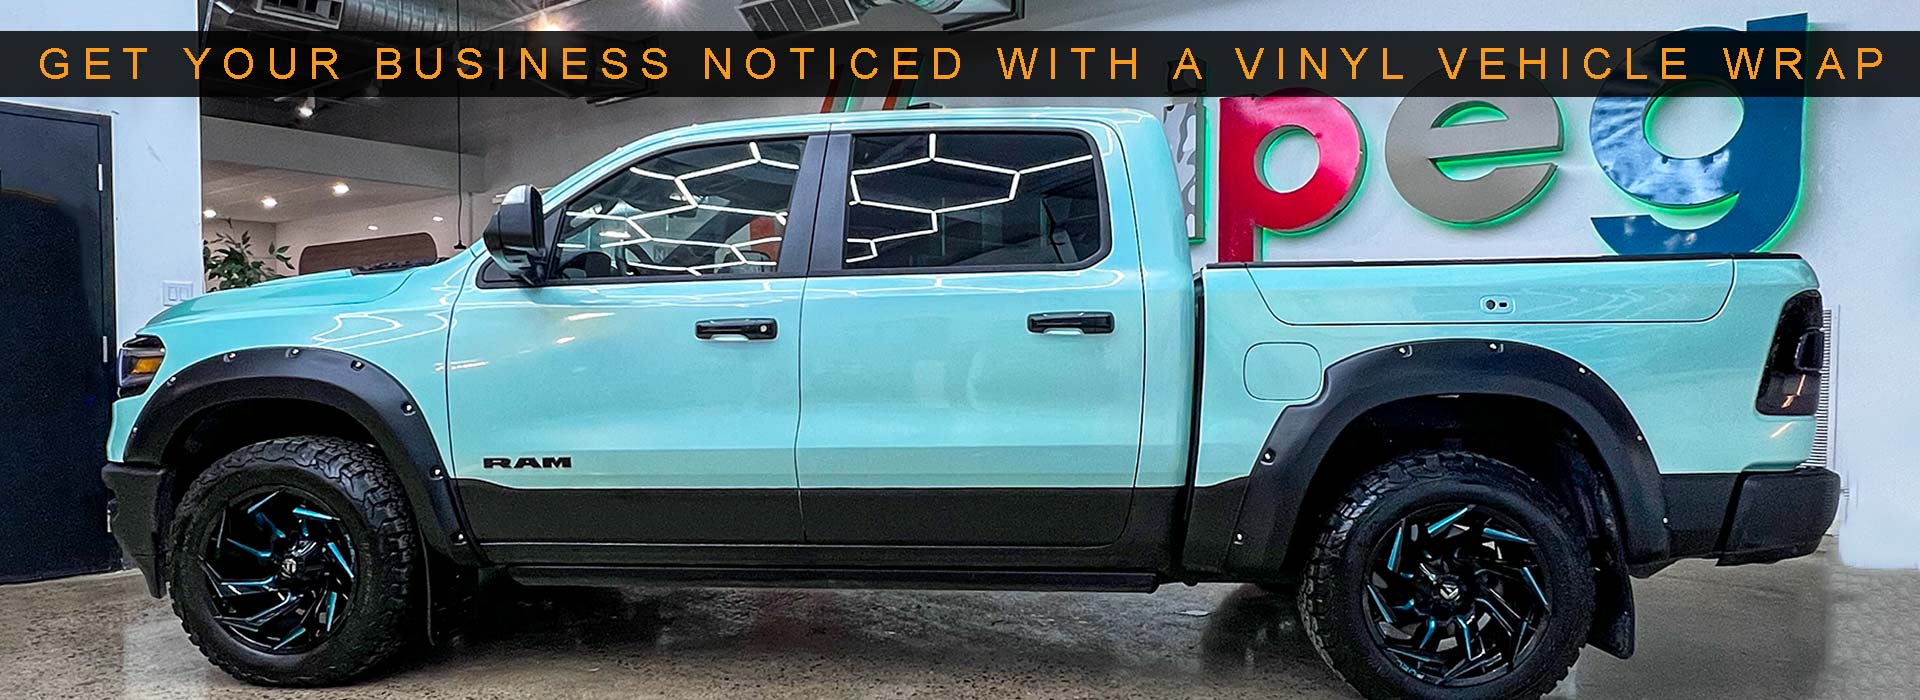 Vinyl Vehicle Wrap